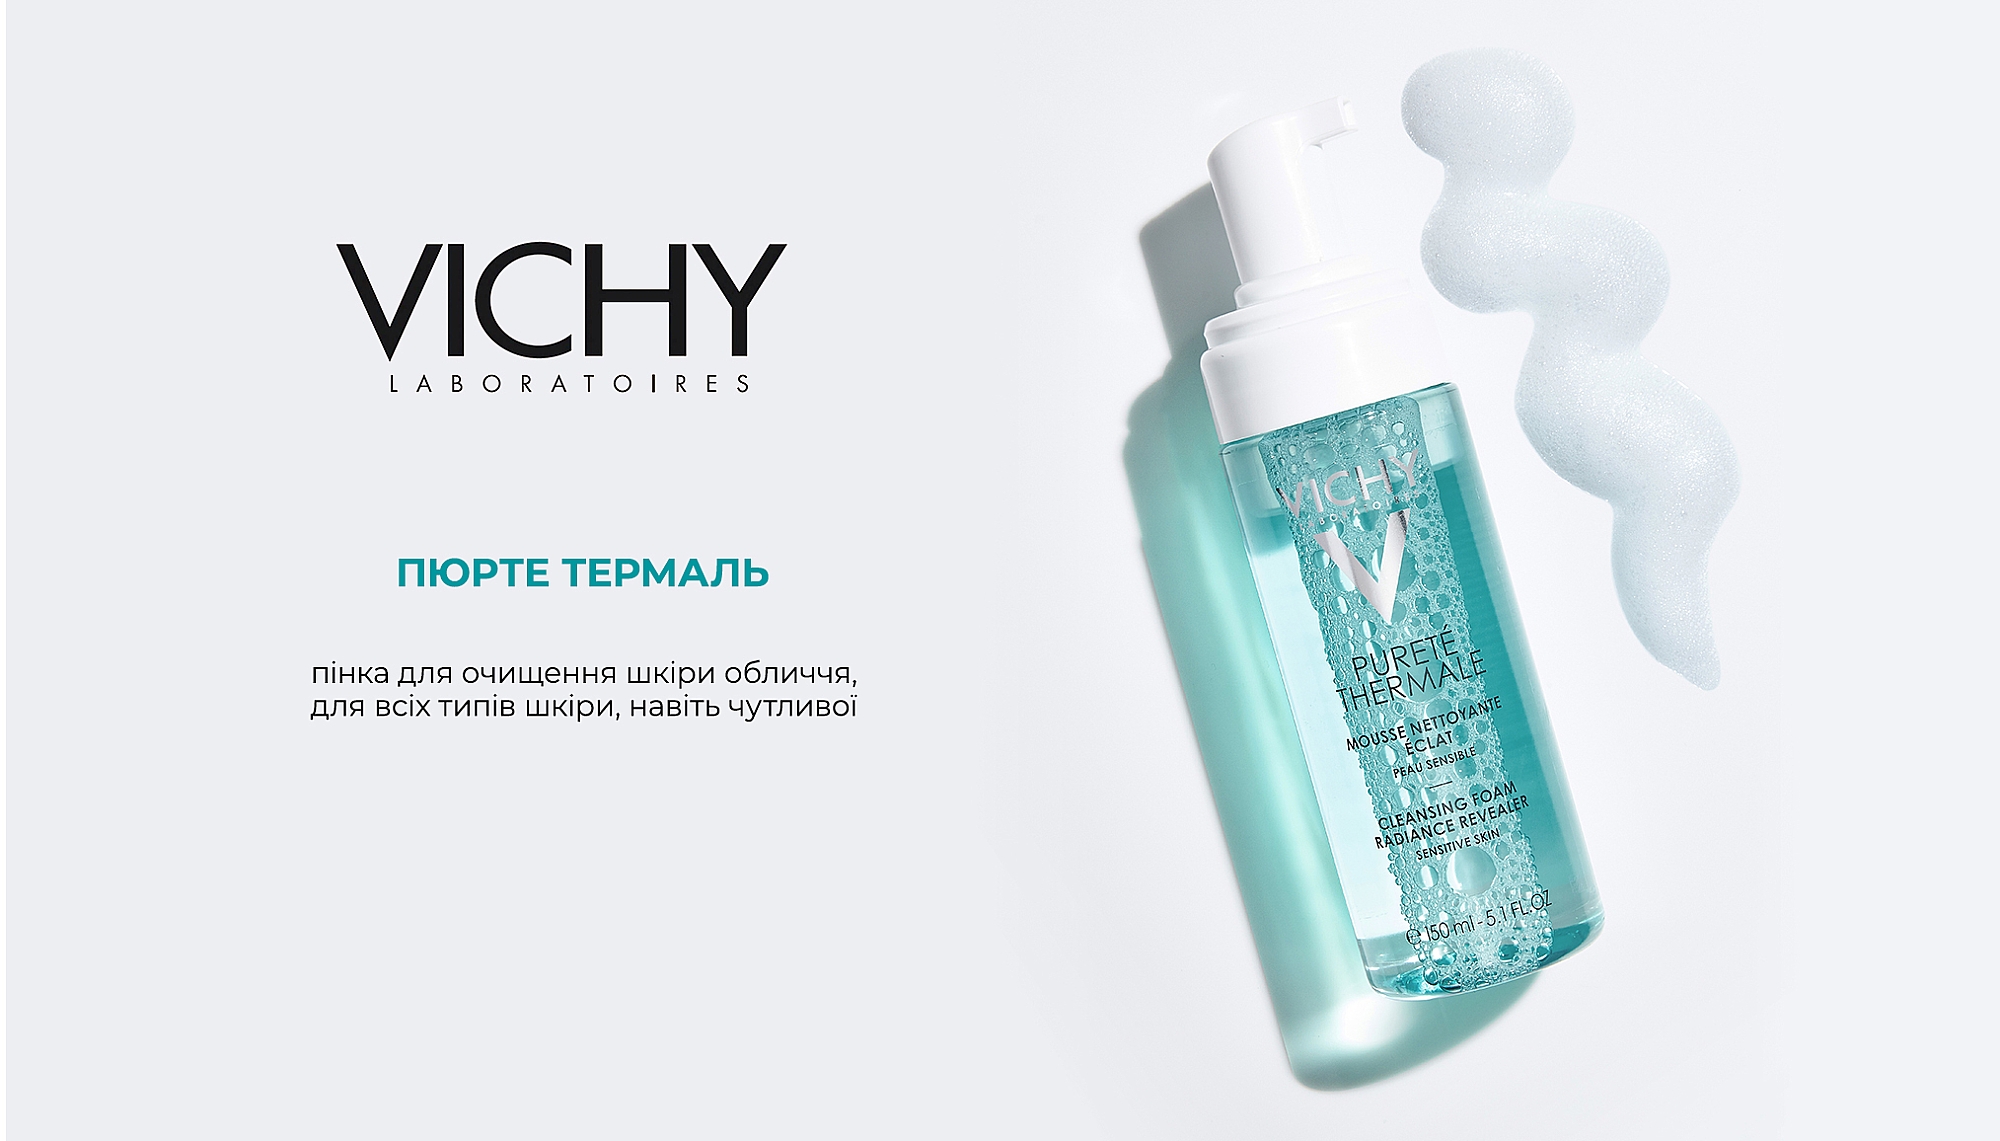 Vichy Purete Thermale Cleansing Foam